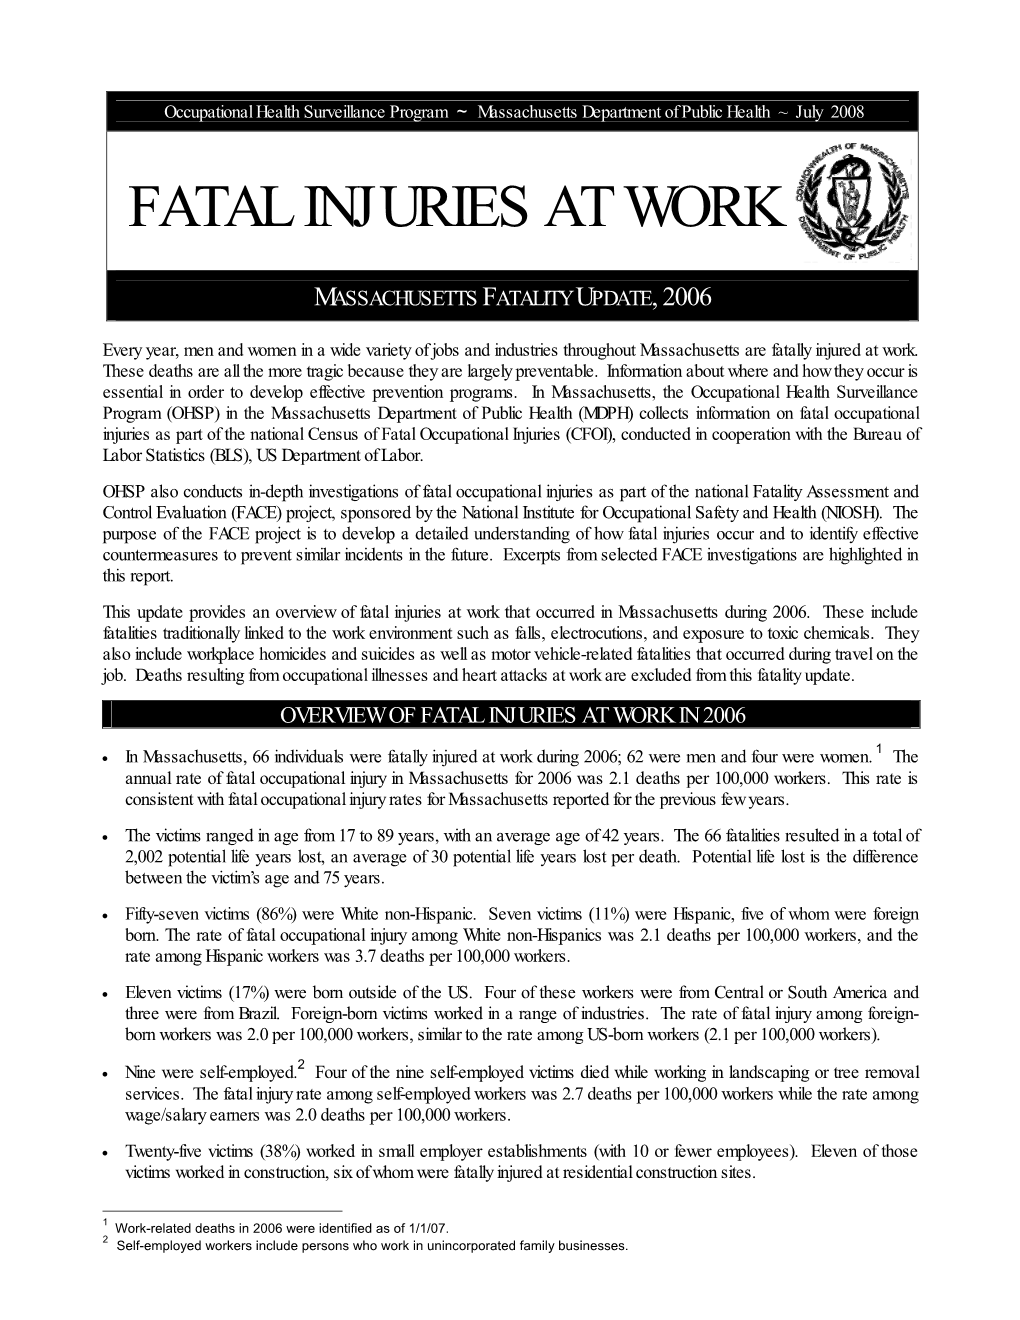 Fatal Injuries at Work